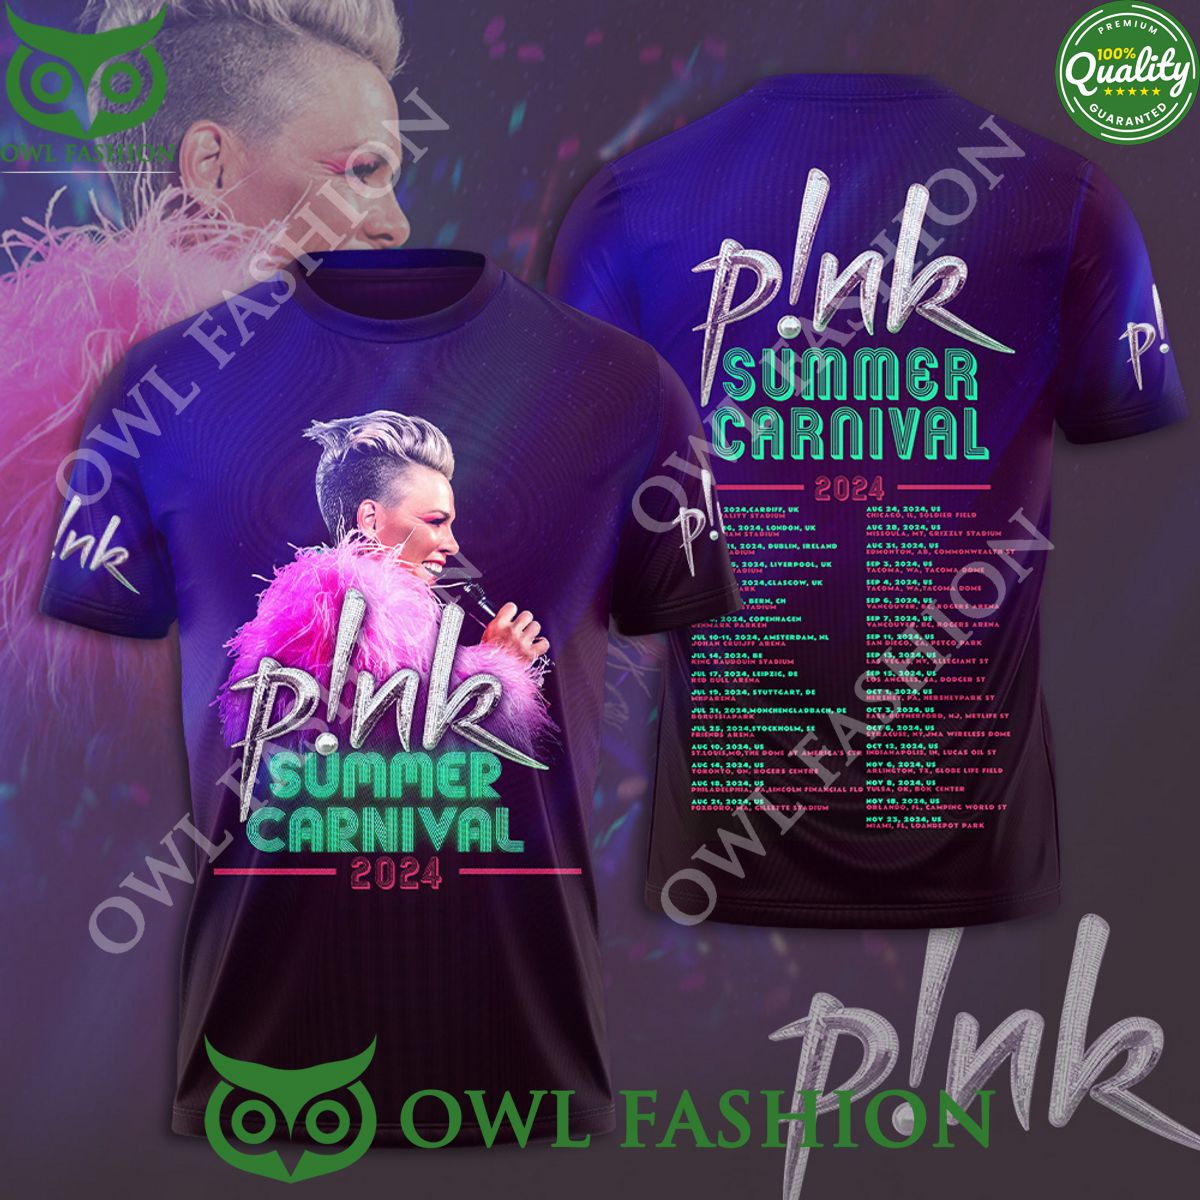 PINK Summer Carnival 2024 3D Shirt Nice shot bro